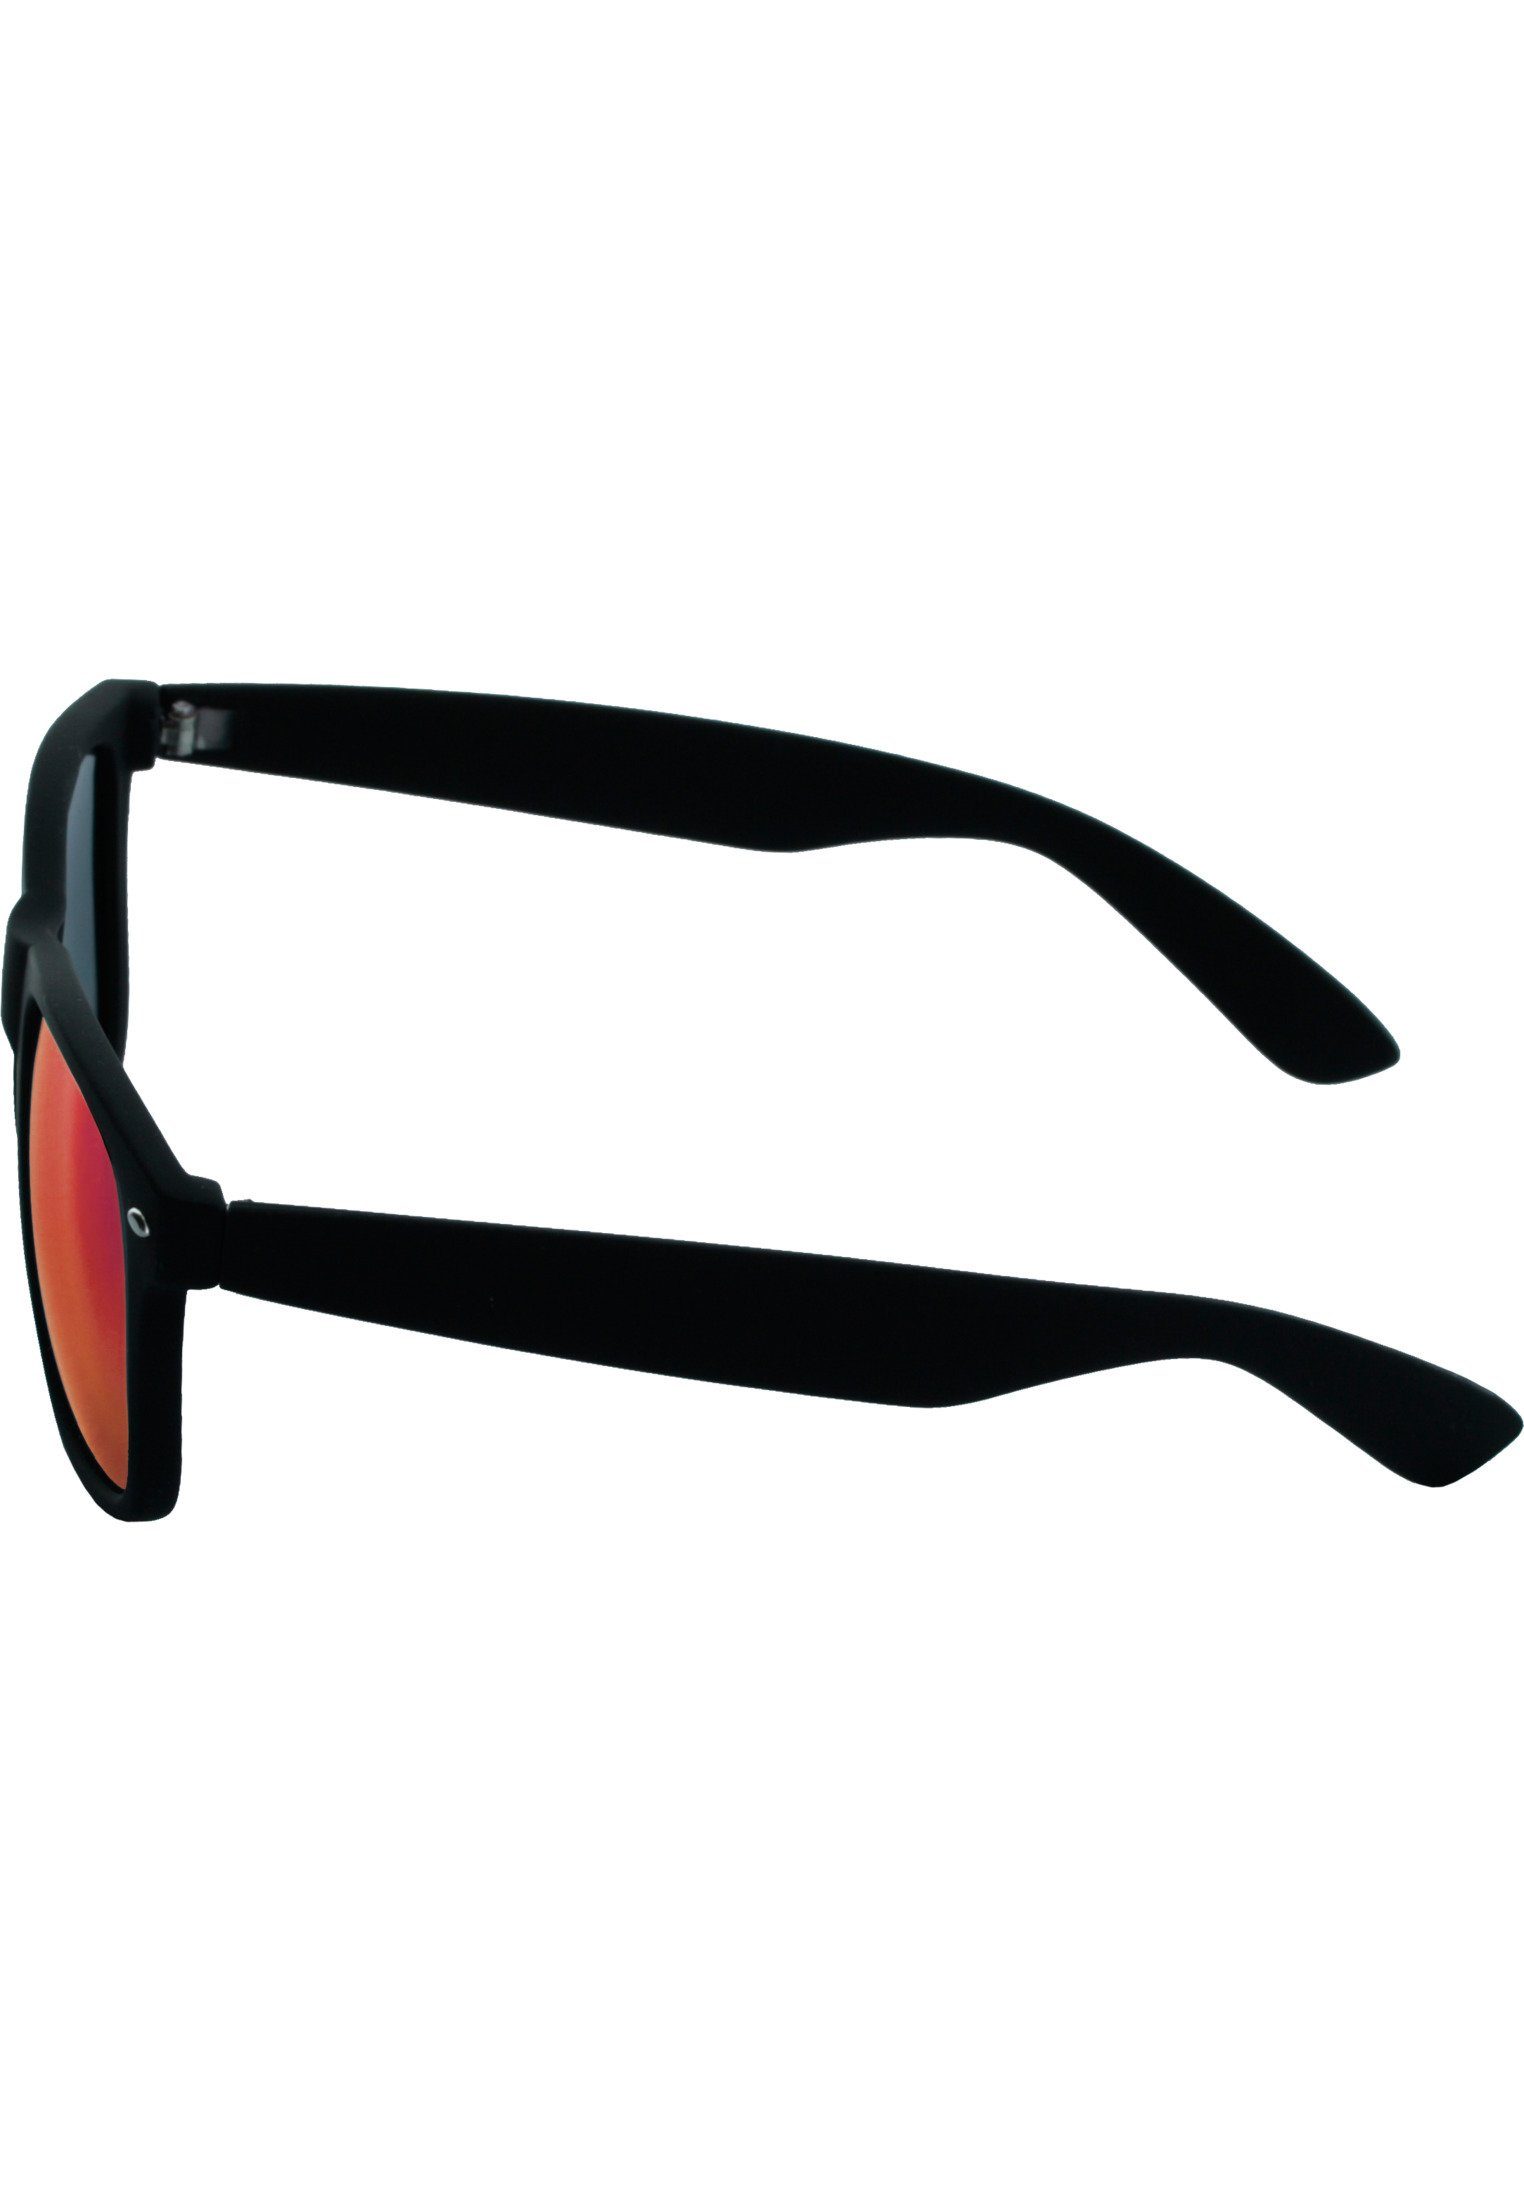 MSTRDS Mirror Likoma Sonnenbrille Accessoires Sunglasses blk/red